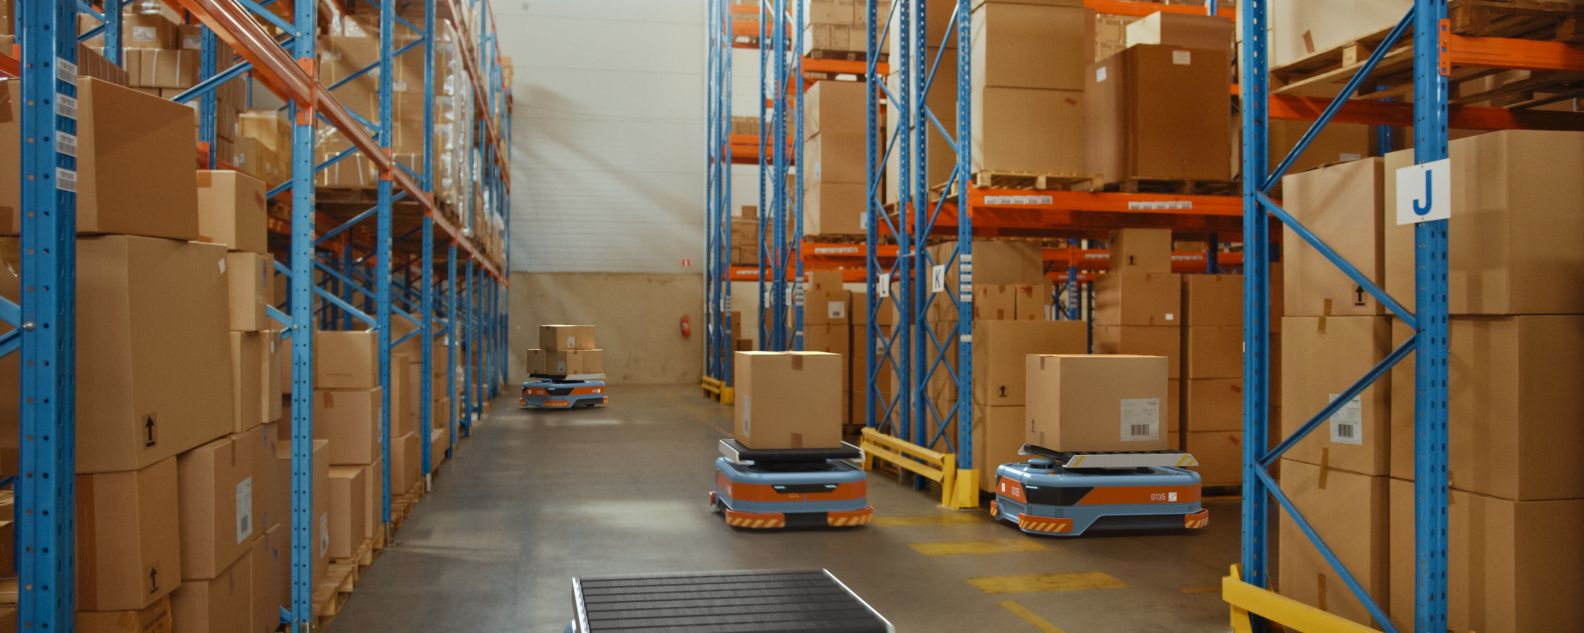 Robots de vehículos guiados automatizados (AGV, siglas en inglés de Automated Guided Vehicle) que transportan cajas de cartón en un almacén